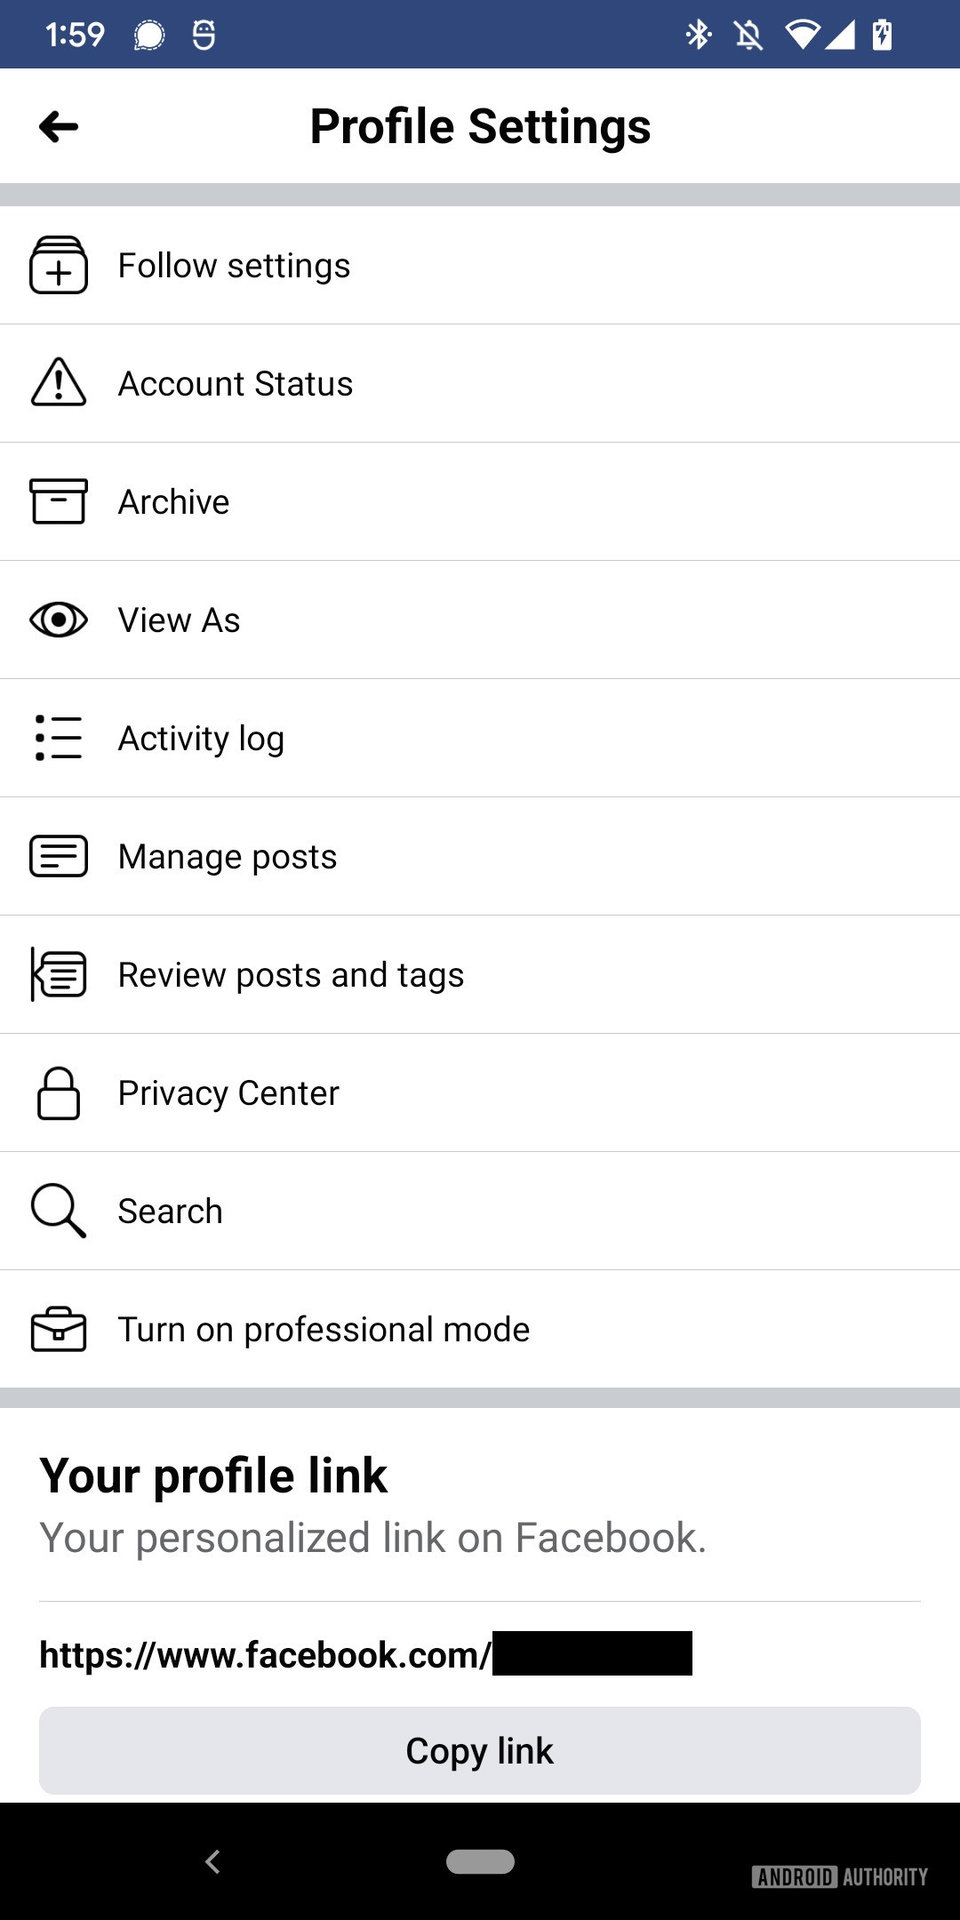 A screenshot of the Facebook mobile app showing the Settings menu.